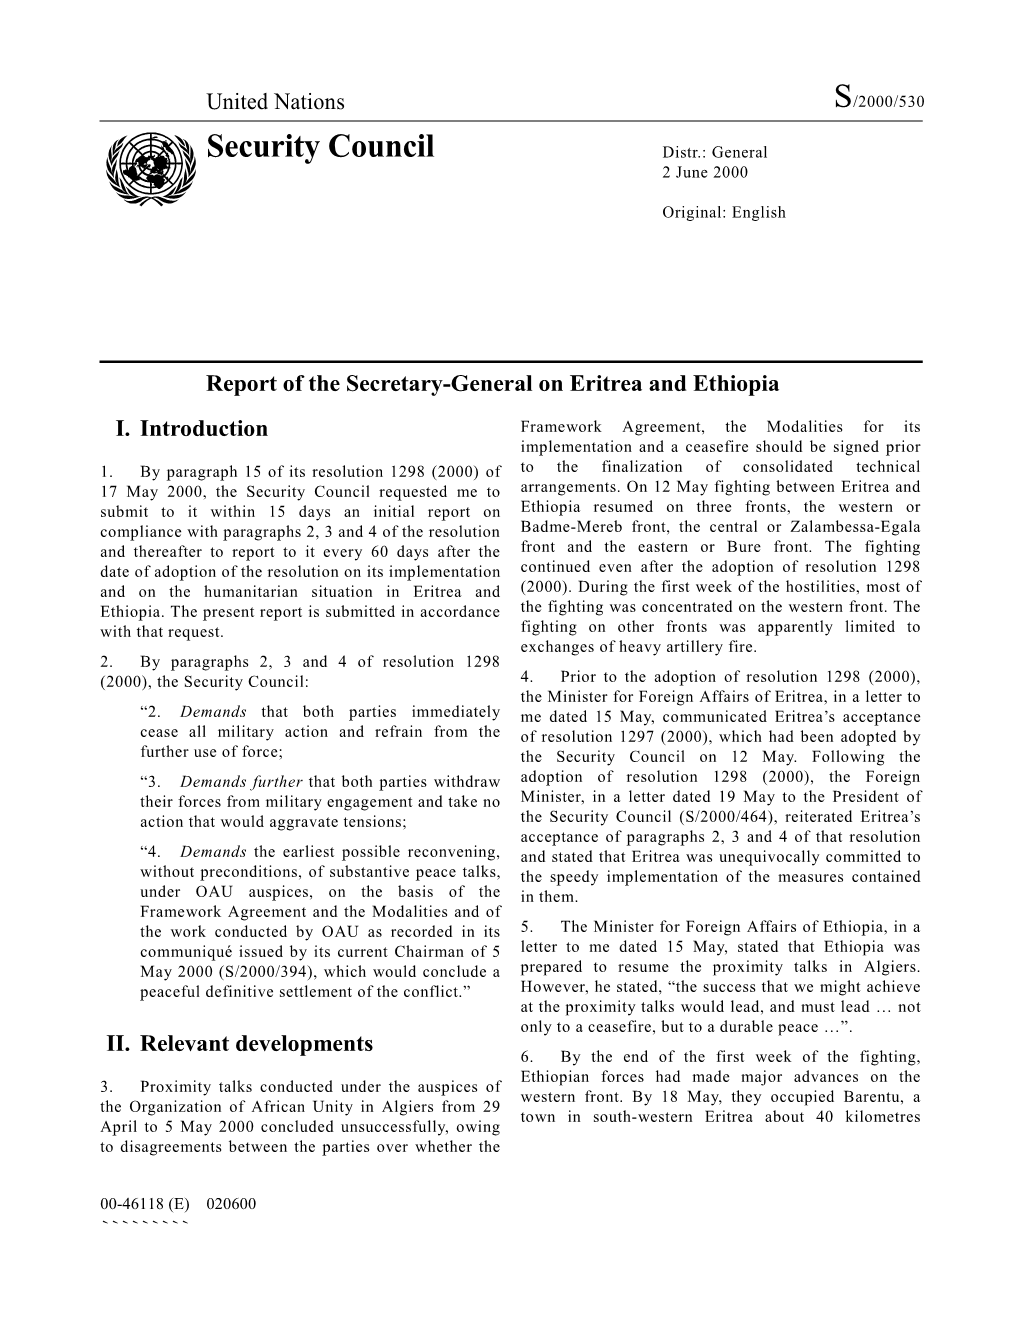 Security Council Distr.: General 2 June 2000